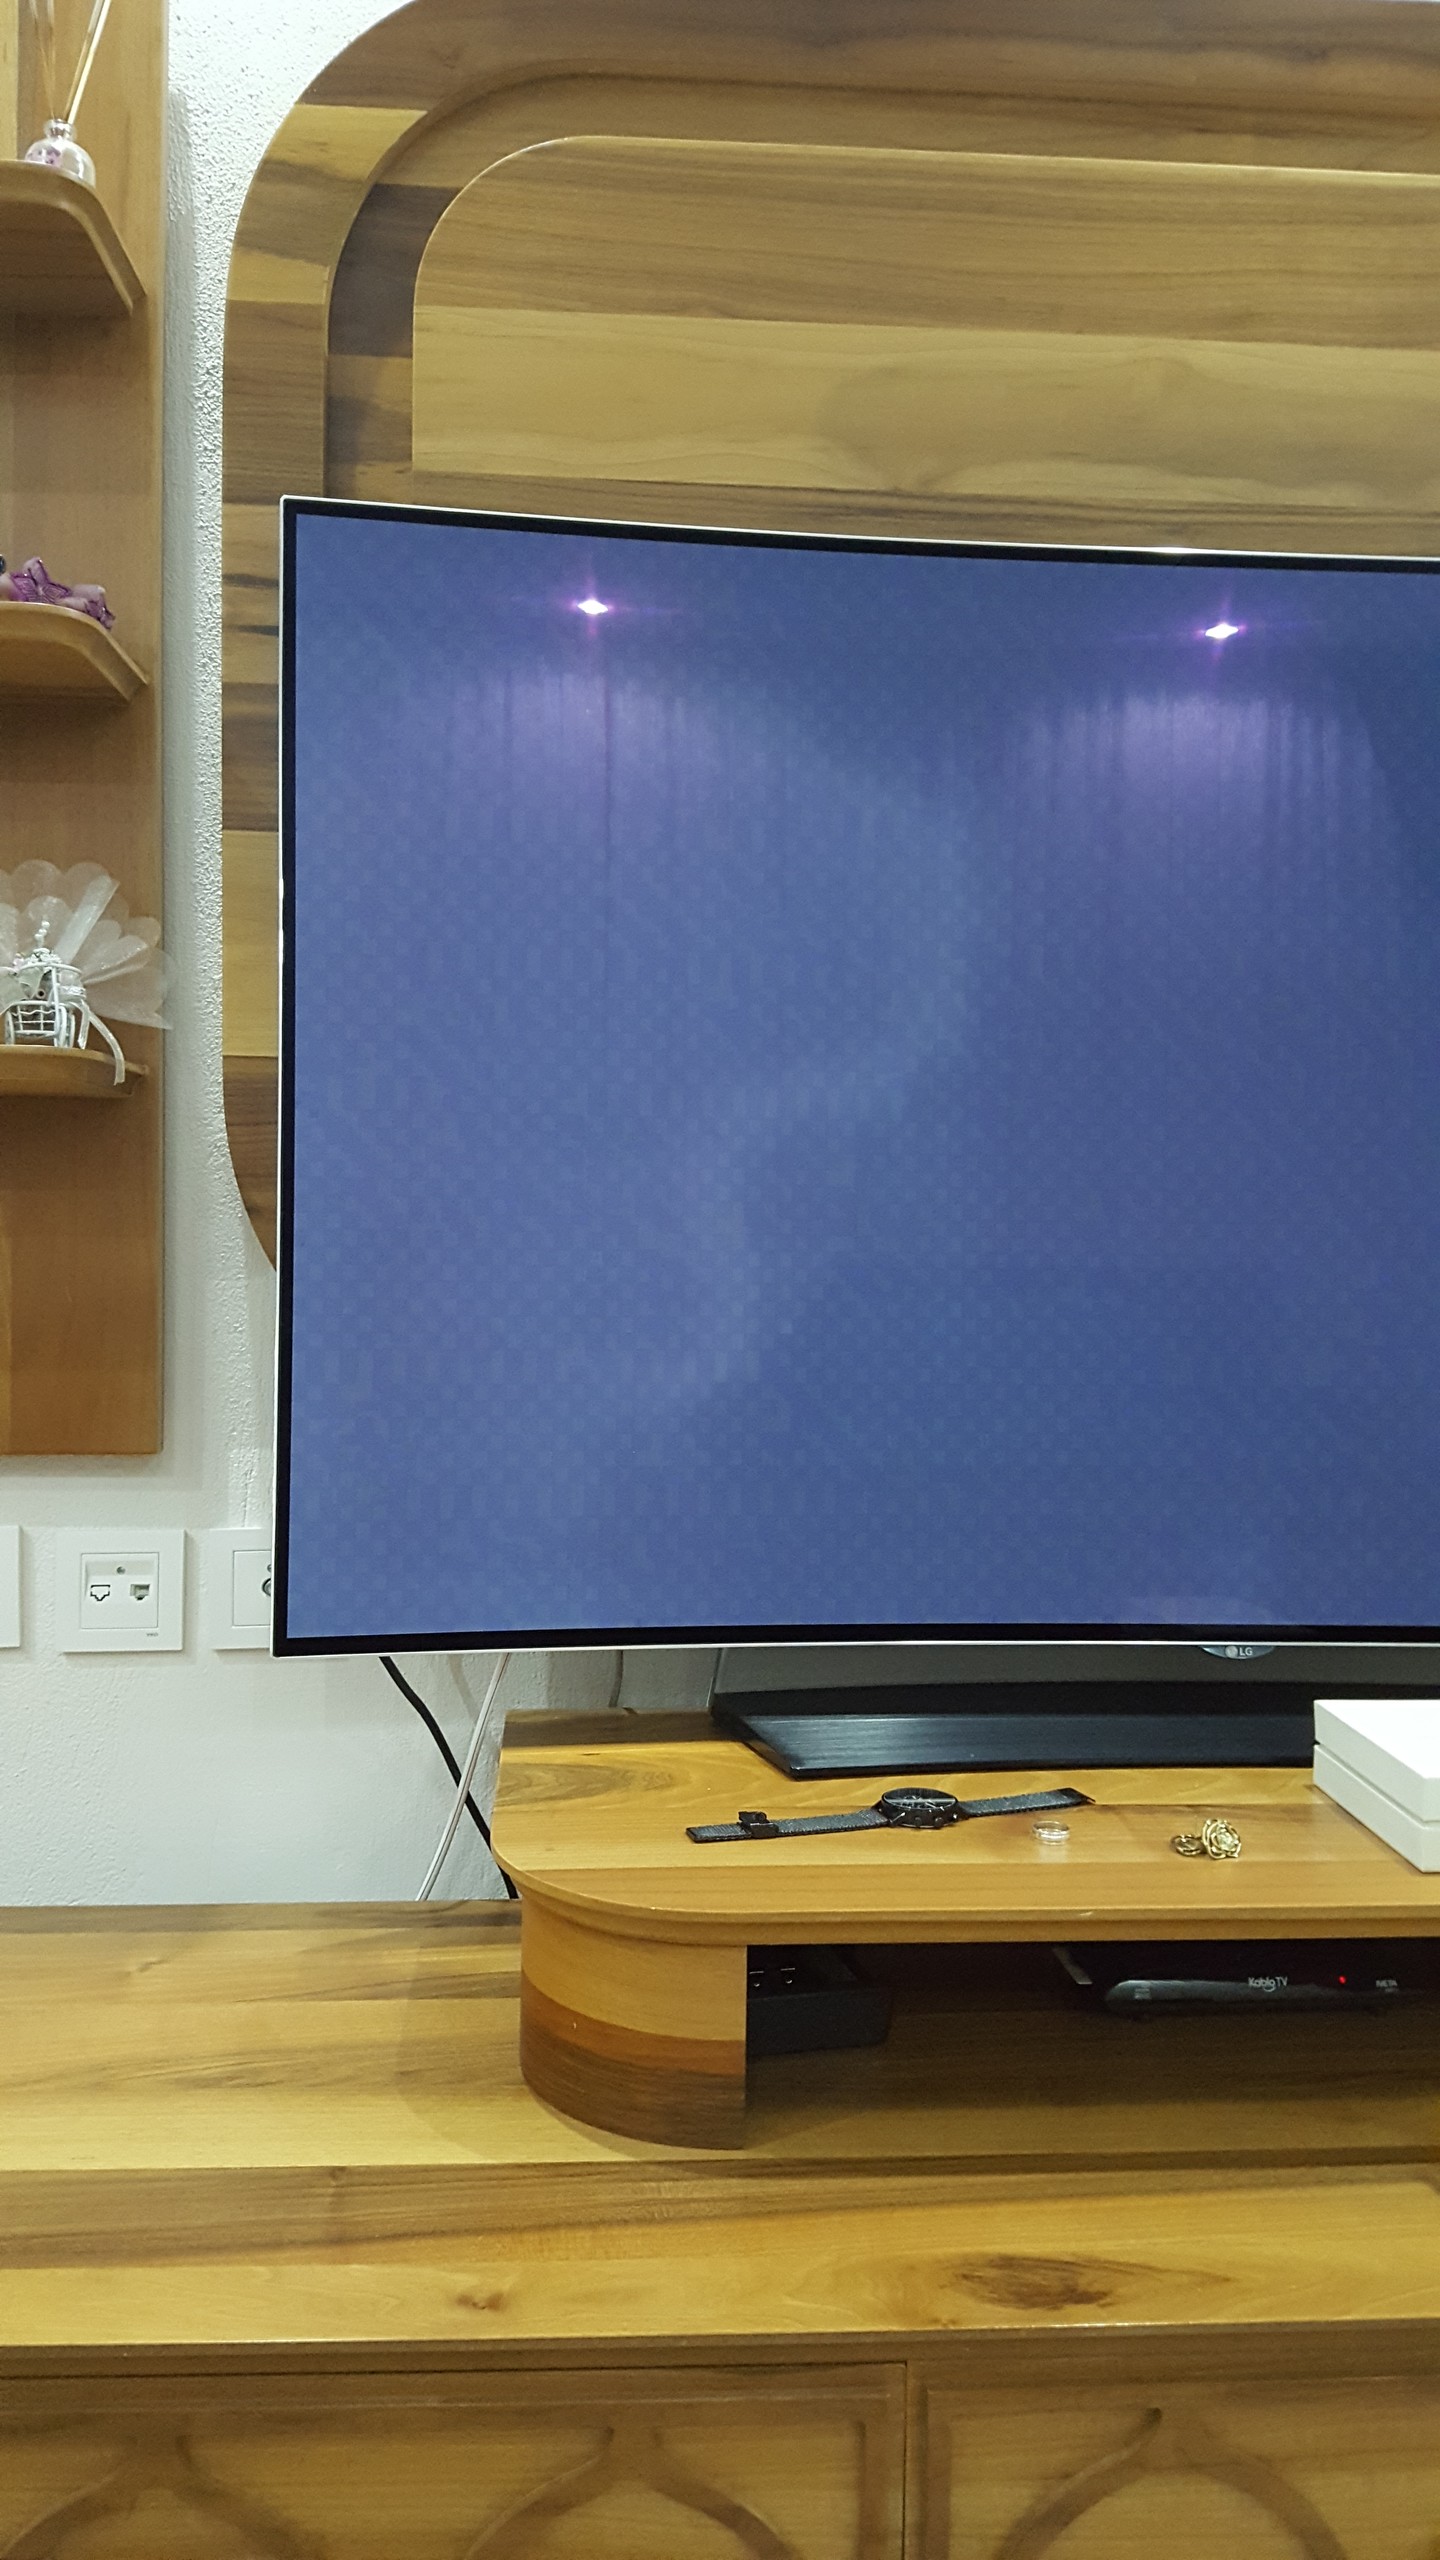 LG OLED 55c6v ekran sorunu